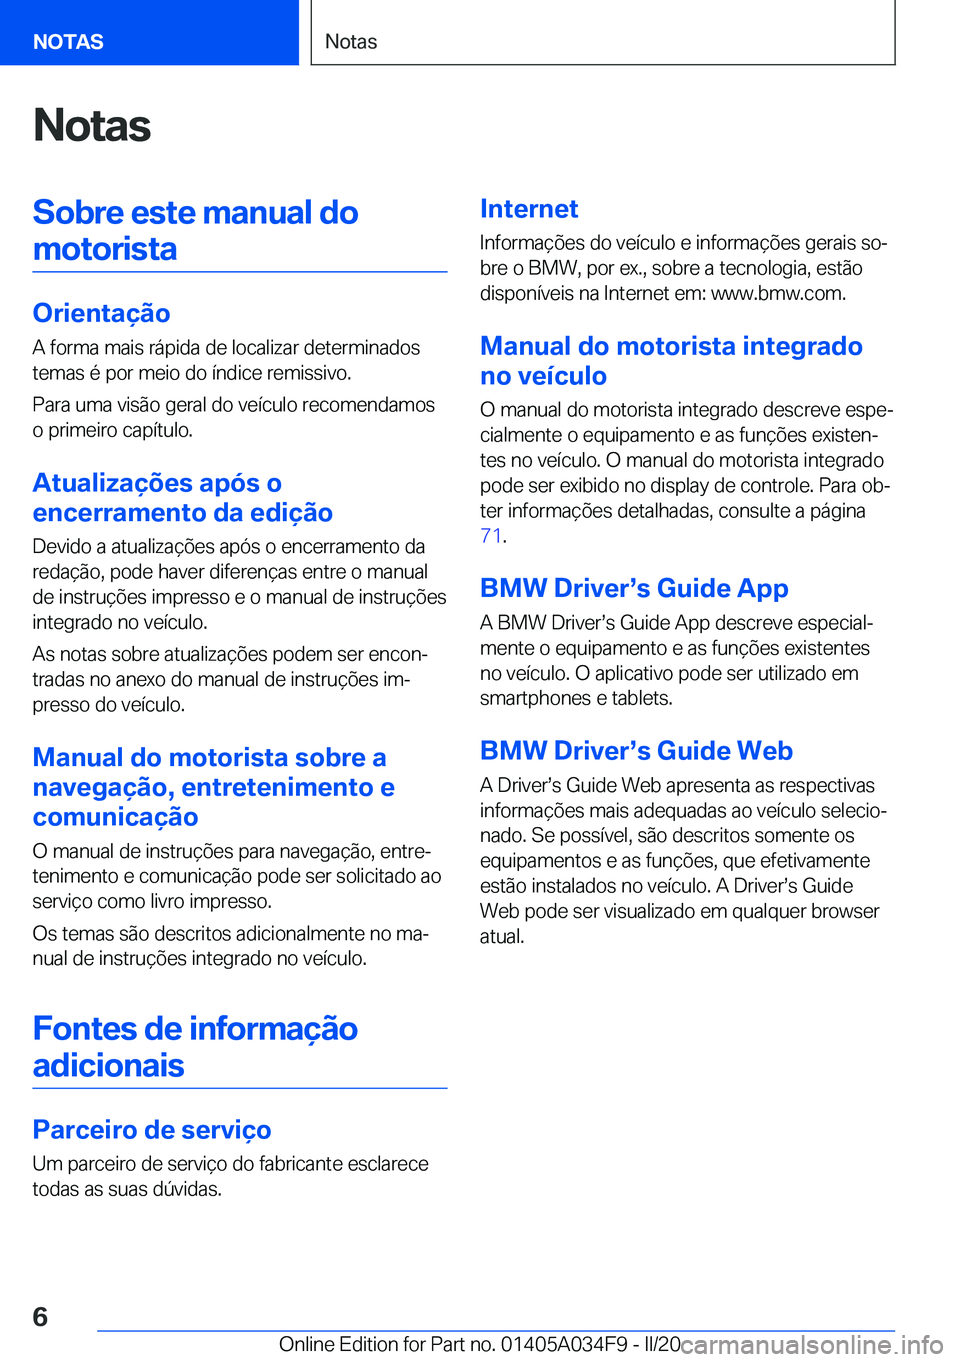 BMW X3 2020  Manual do condutor (in Portuguese) �N�o�t�a�s�S�o�b�r�e��e�s�t�e��m�a�n�u�a�l��d�o�m�o�t�o�r�i�s�t�a
�O�r�i�e�n�t�a�